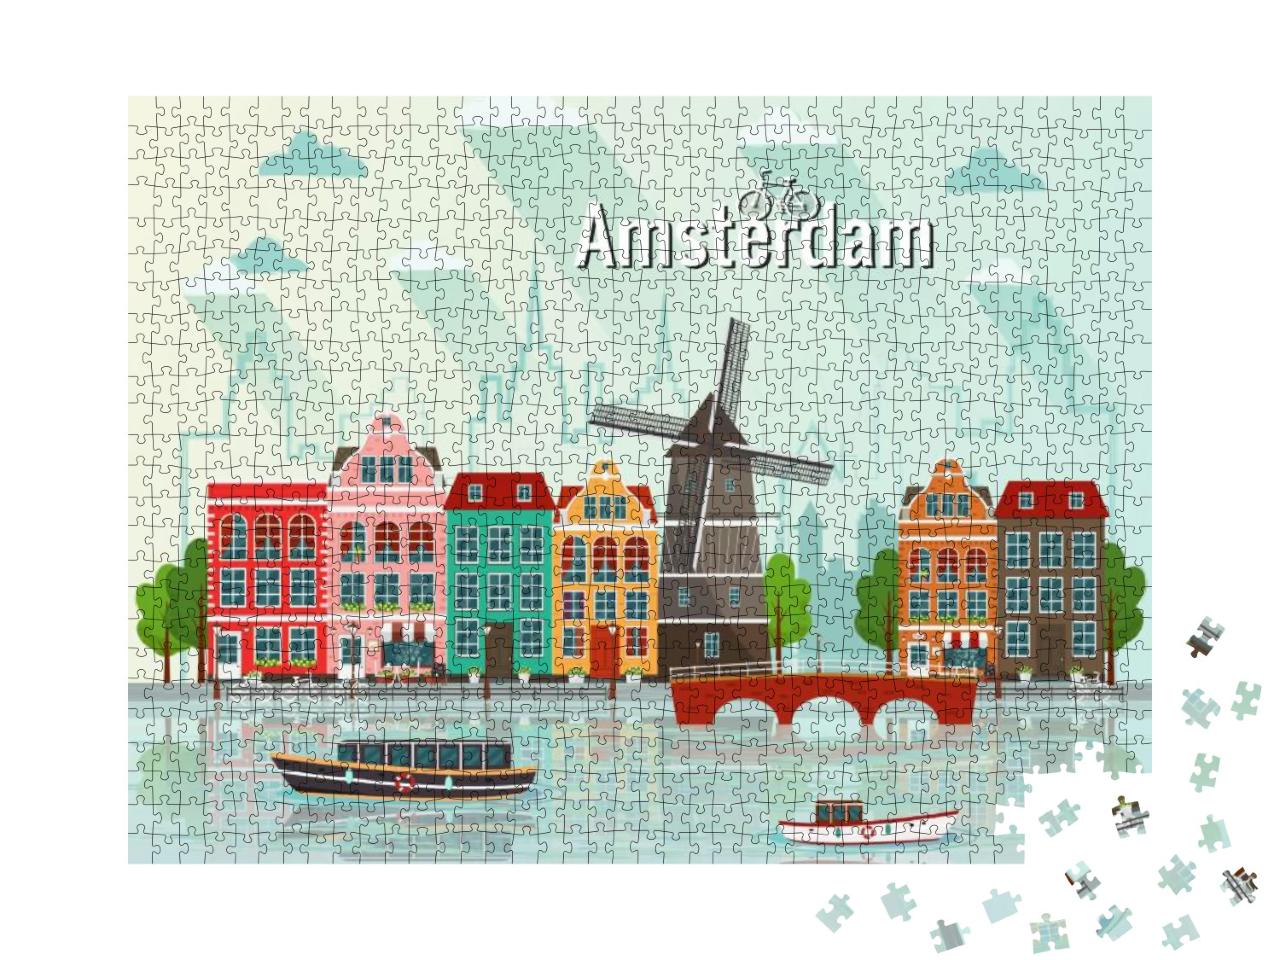 Puzzle 1000 Teile „Vektor-Illustration von Amsterdam“